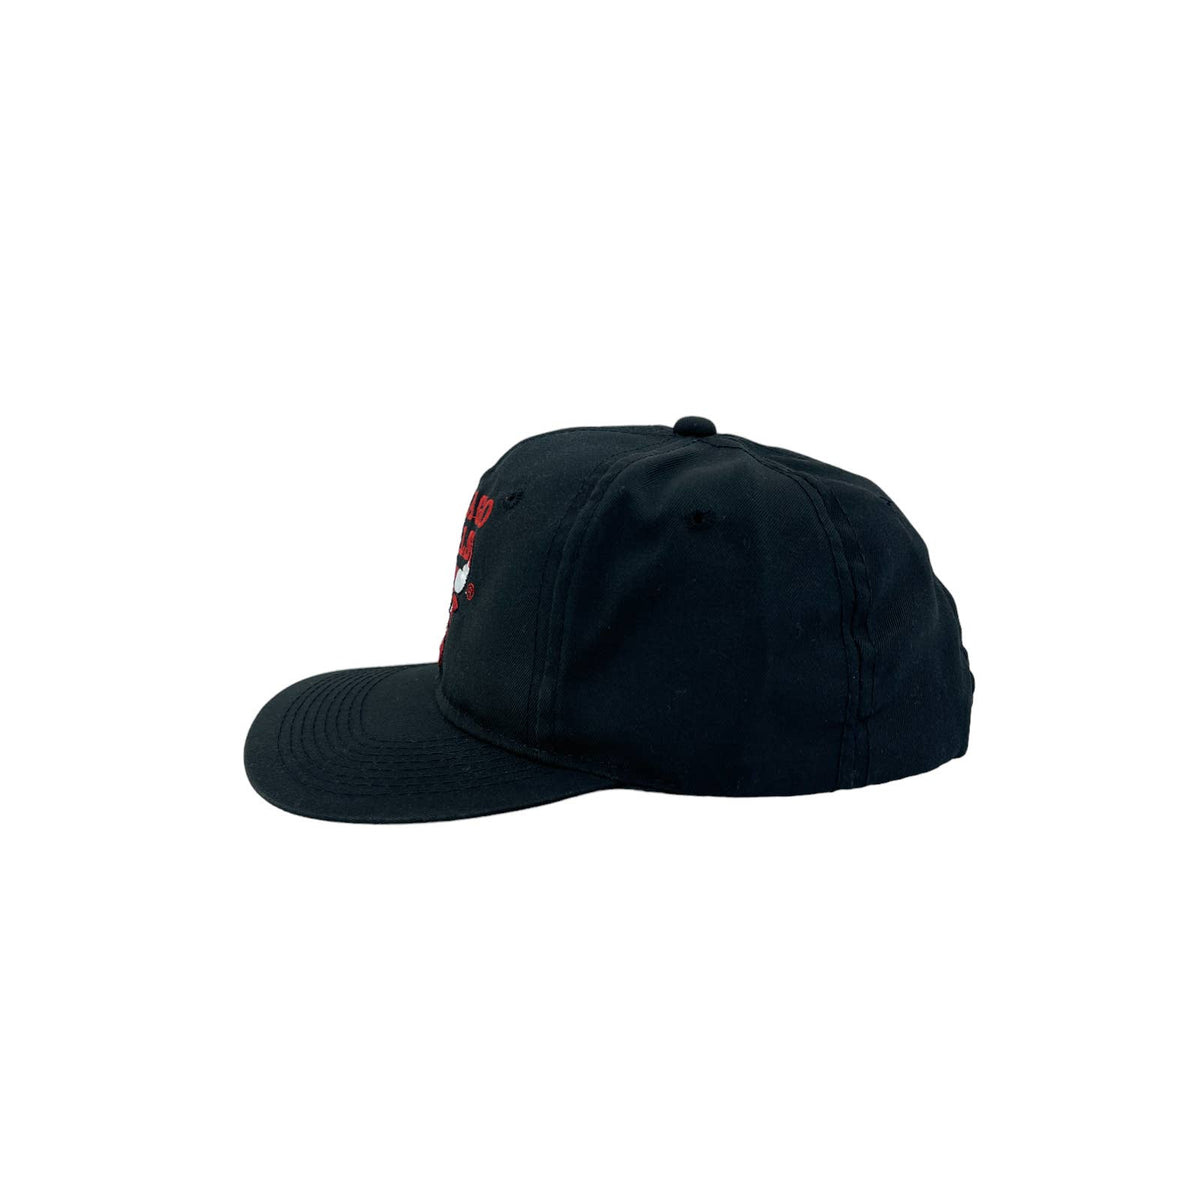 Vintage 1990's Chicago Bulls The G Cap NBA Snapback Hat